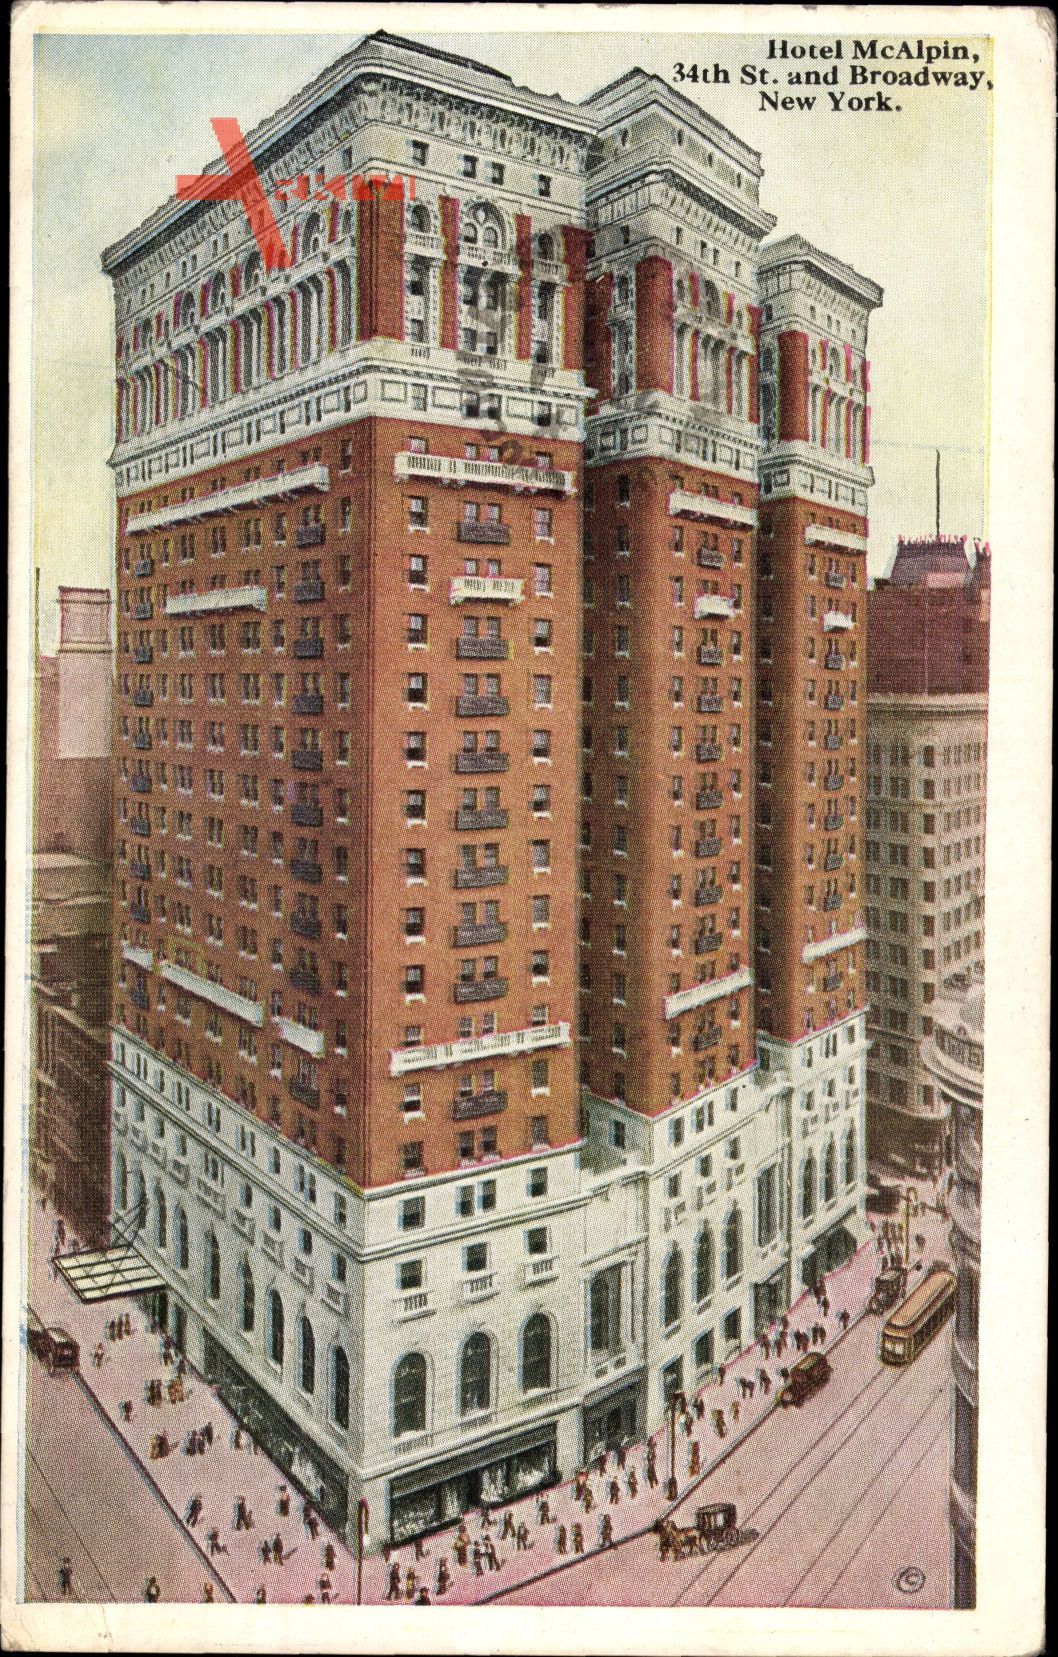 New York City USA, Hotel McAlpin, 34th Street and Broadway